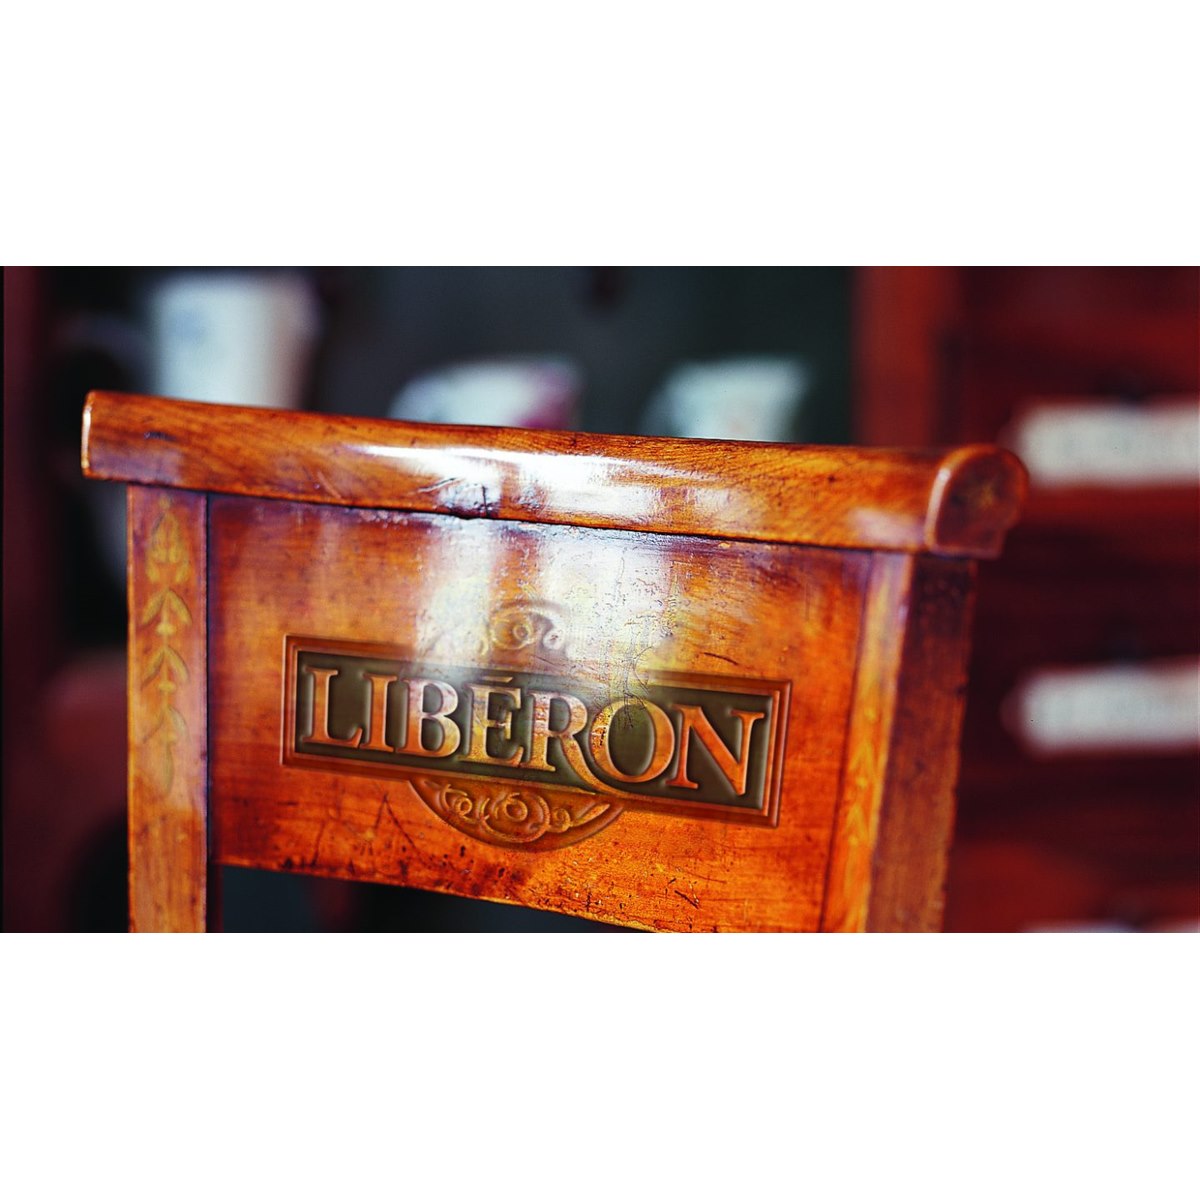 Where to buy Liberon Wood Bleacher